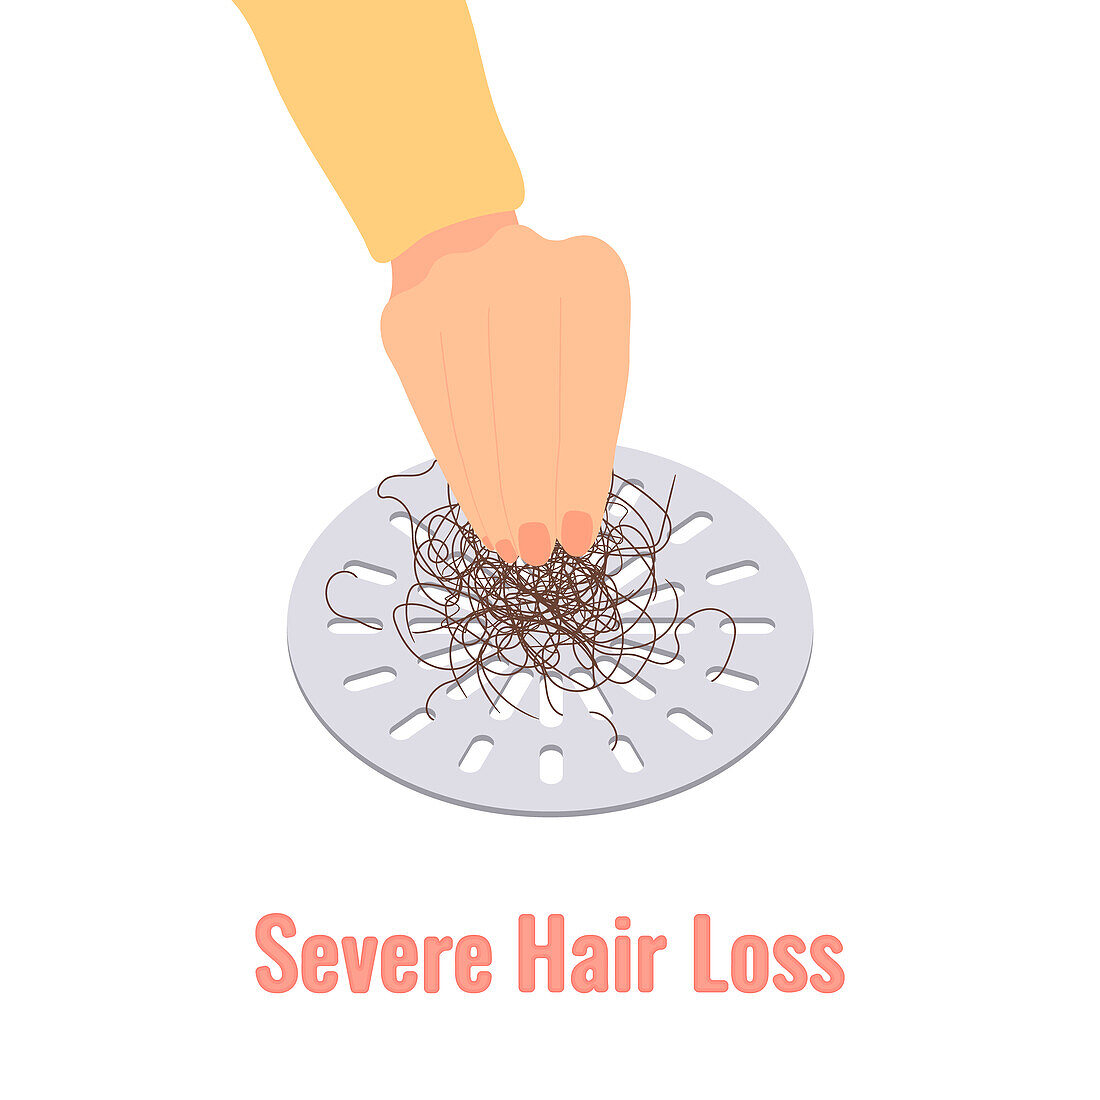 Severe hair loss, conceptual illustration